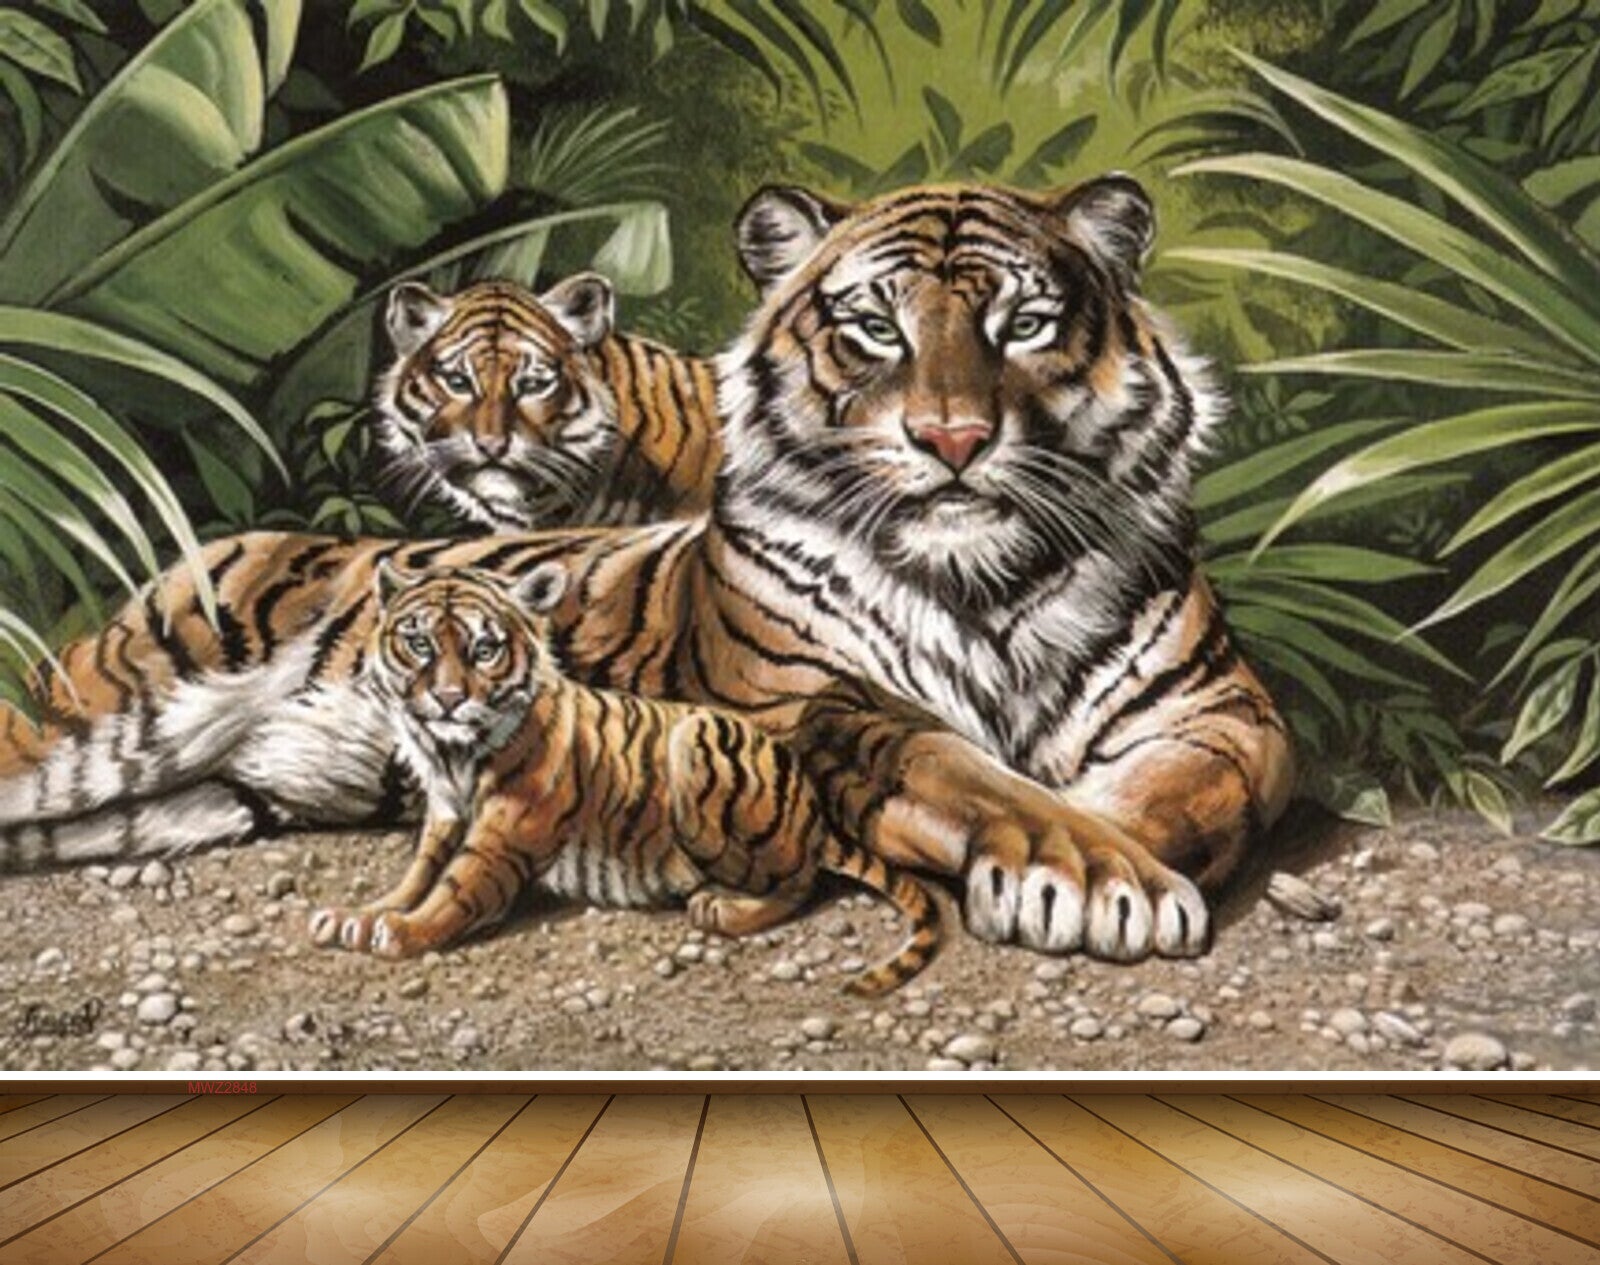 Avikalp MWZ2848 Tigers Animals Family Leaves Stones Plants Painting HD Wallpaper